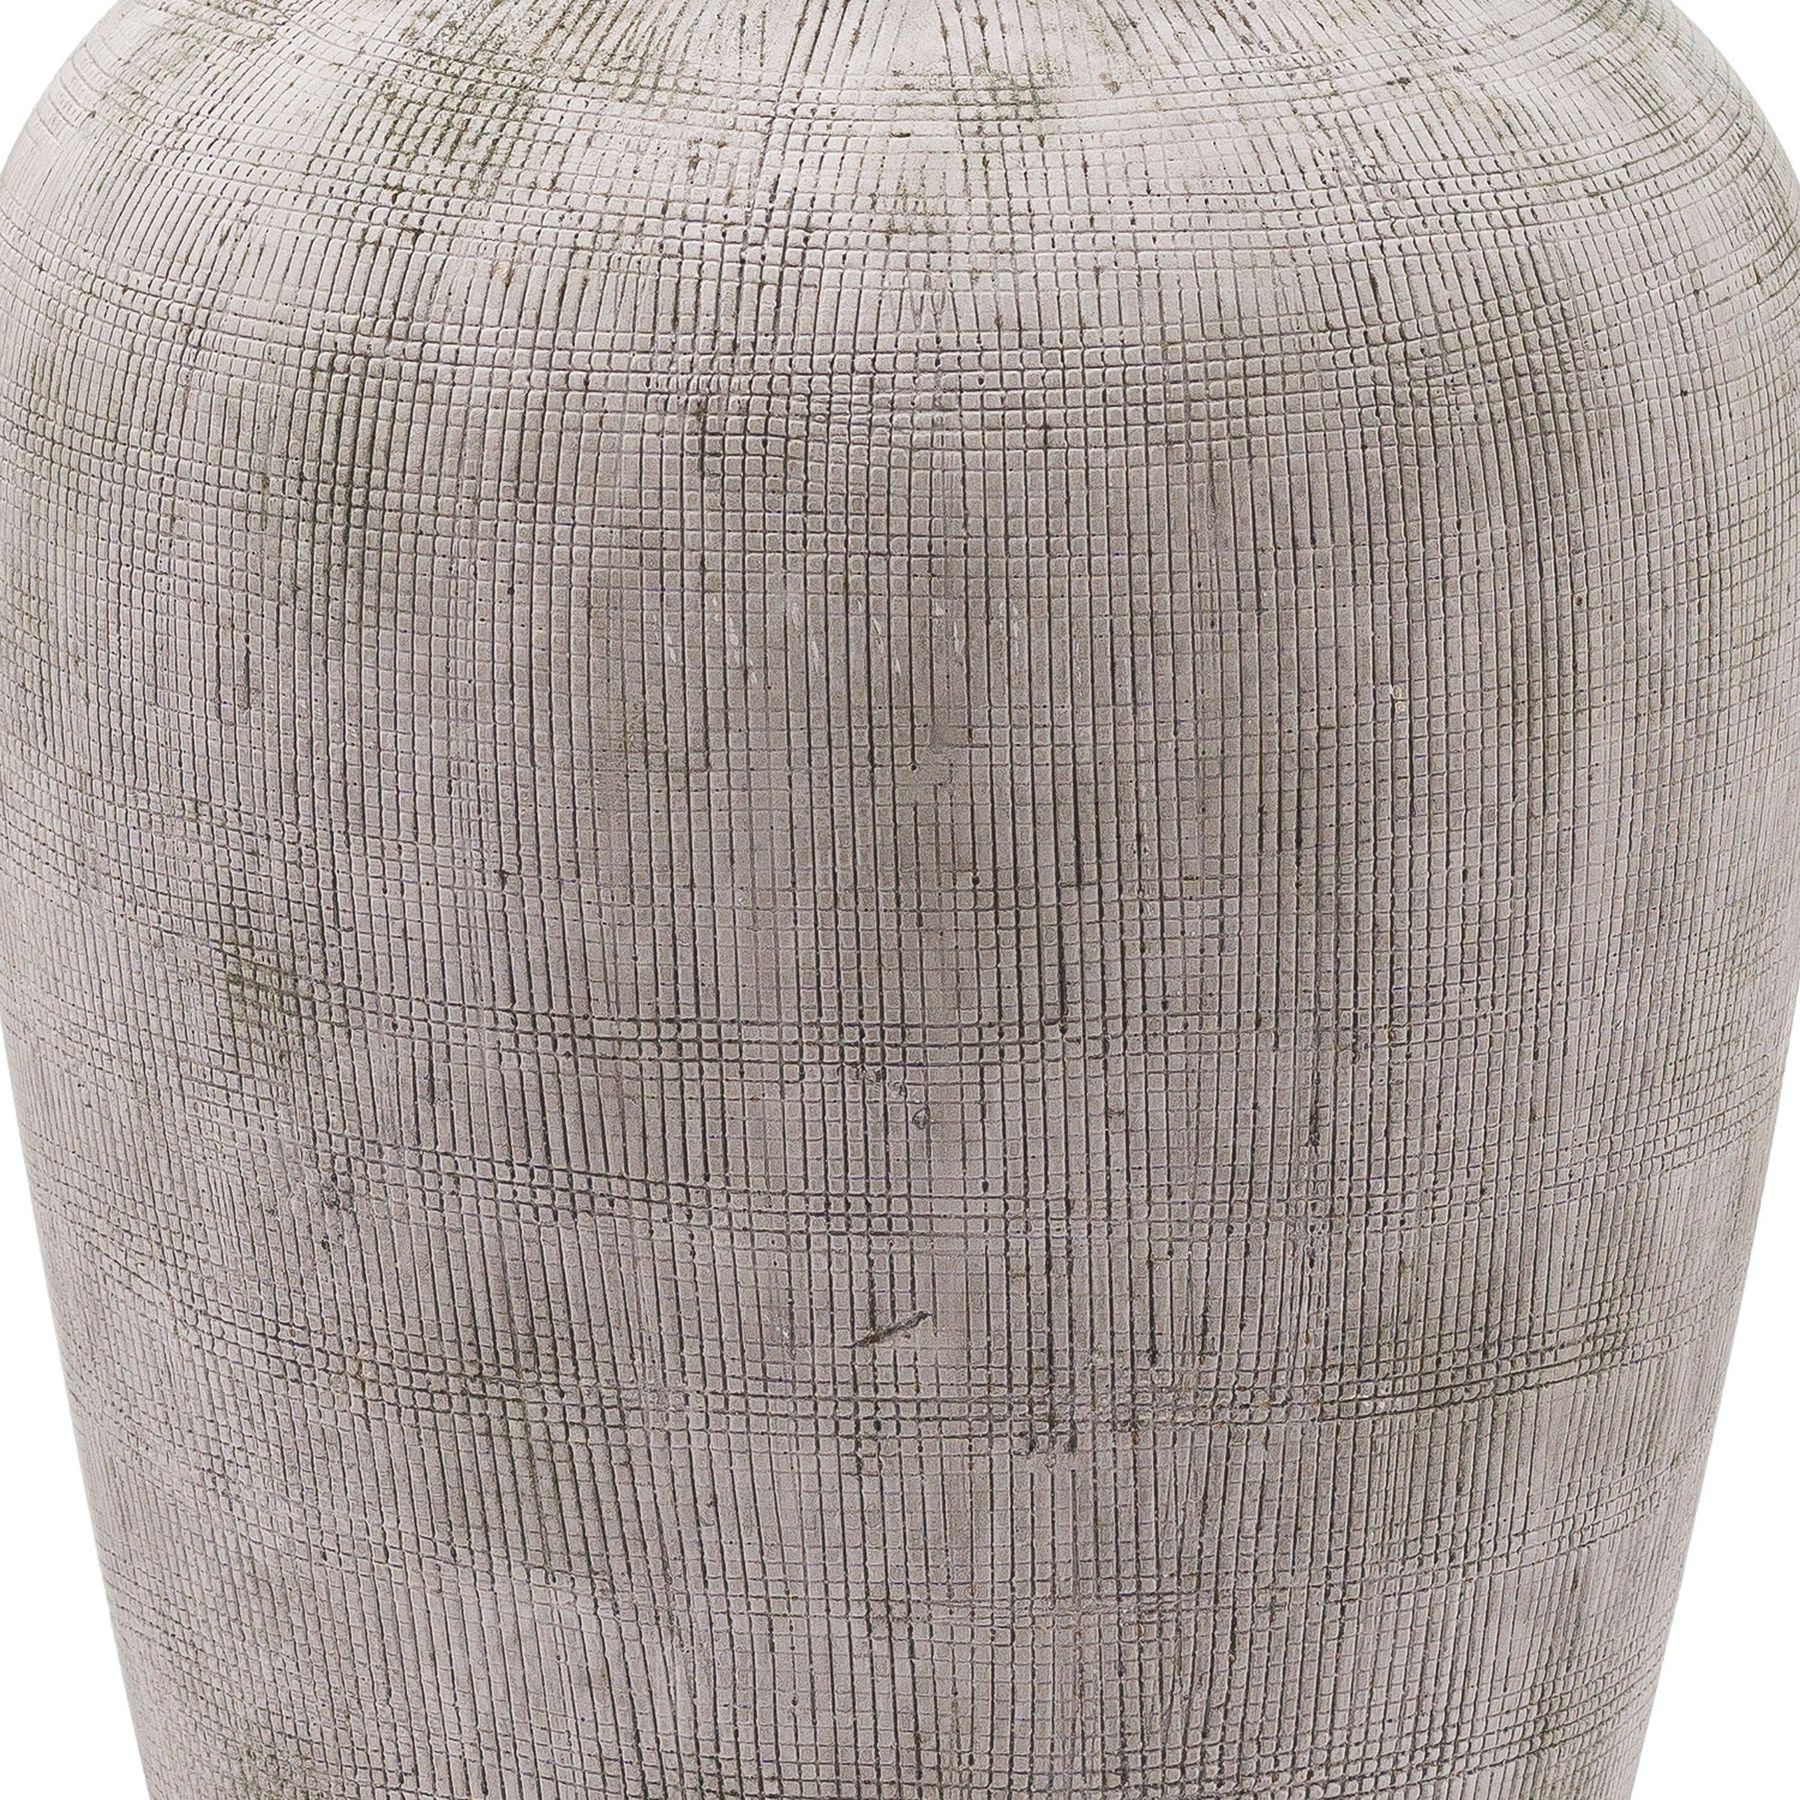 Bloomville Chours Stone Vase - Image 2